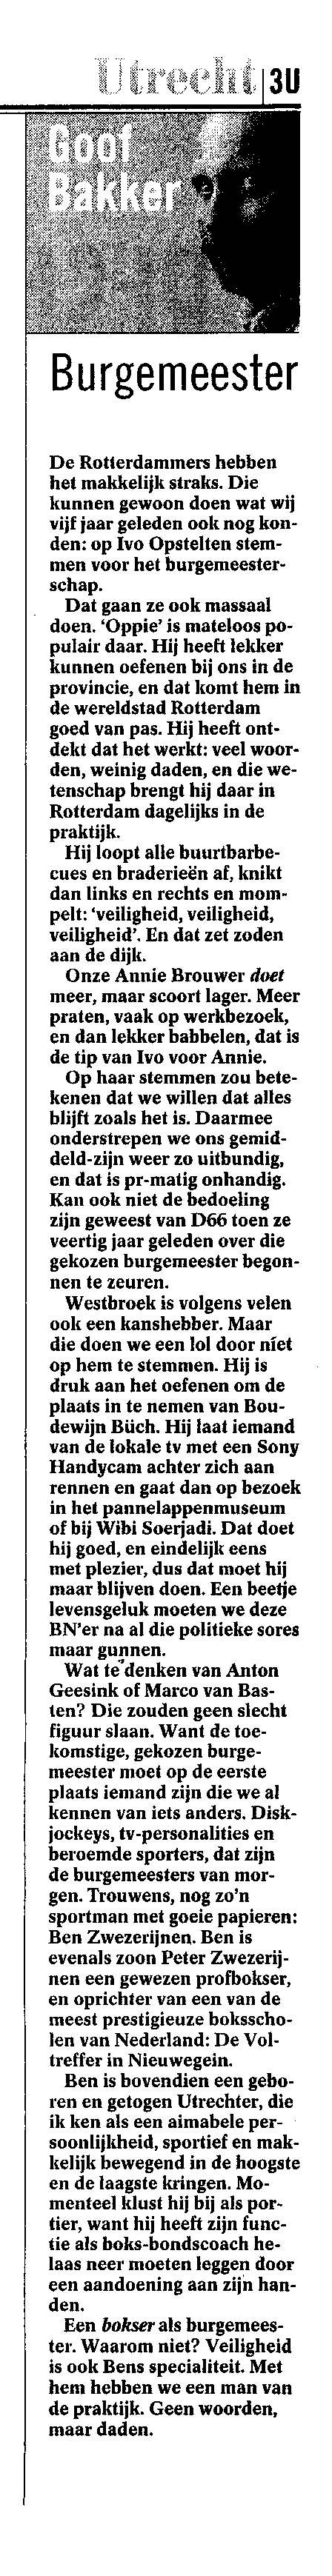 Volkskrant_2004-03-13-burgemeester